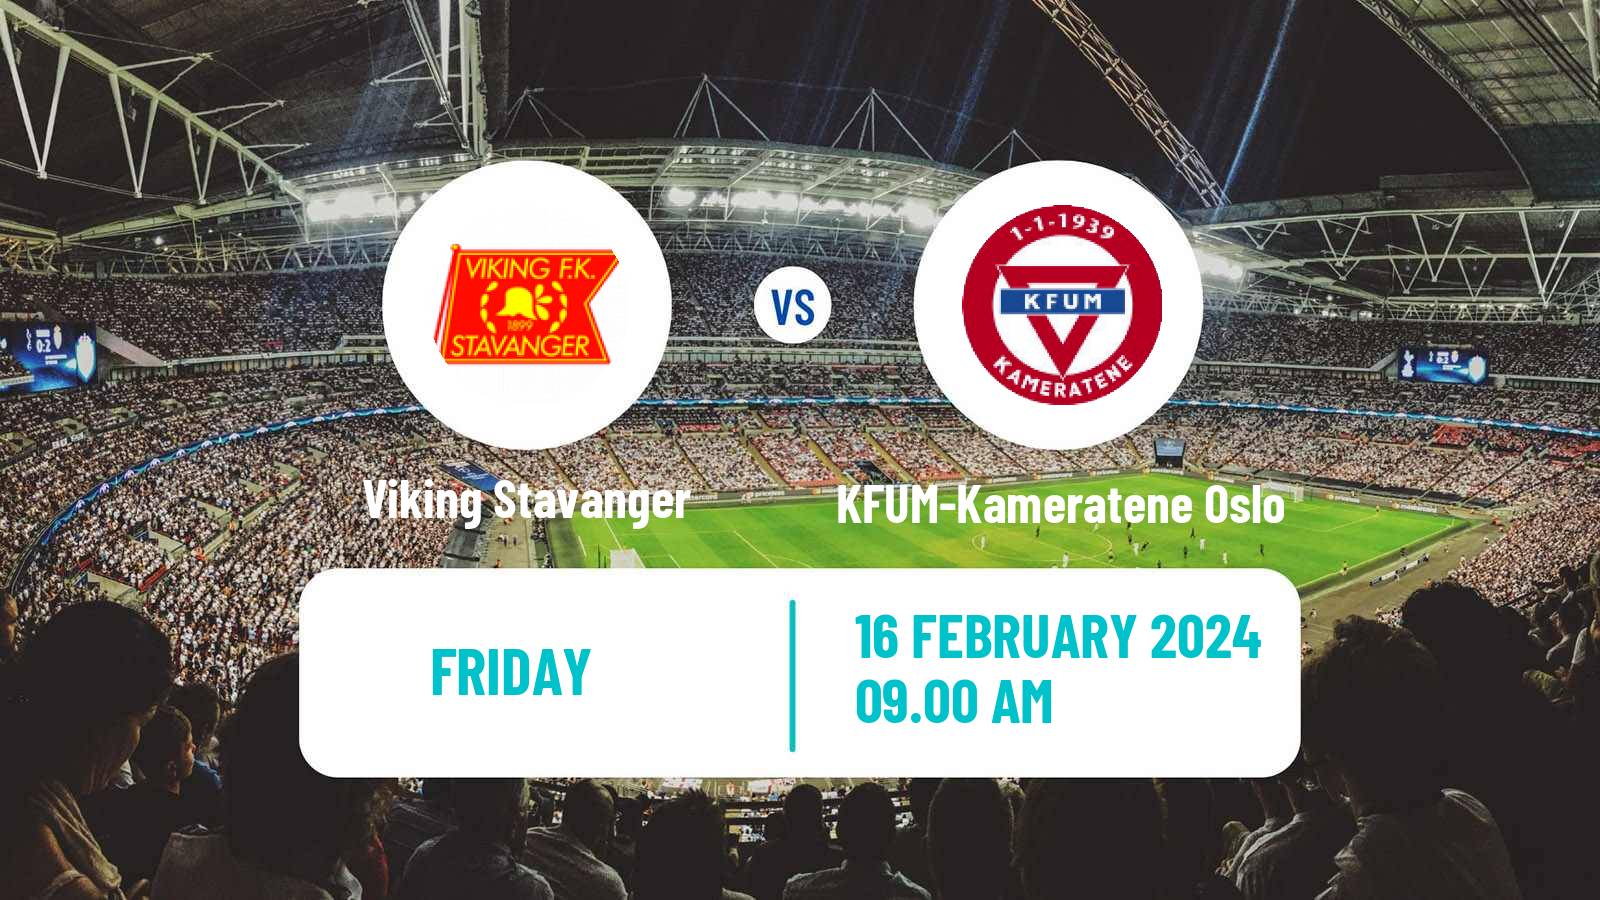 Soccer Club Friendly Viking Stavanger - KFUM-Kameratene Oslo